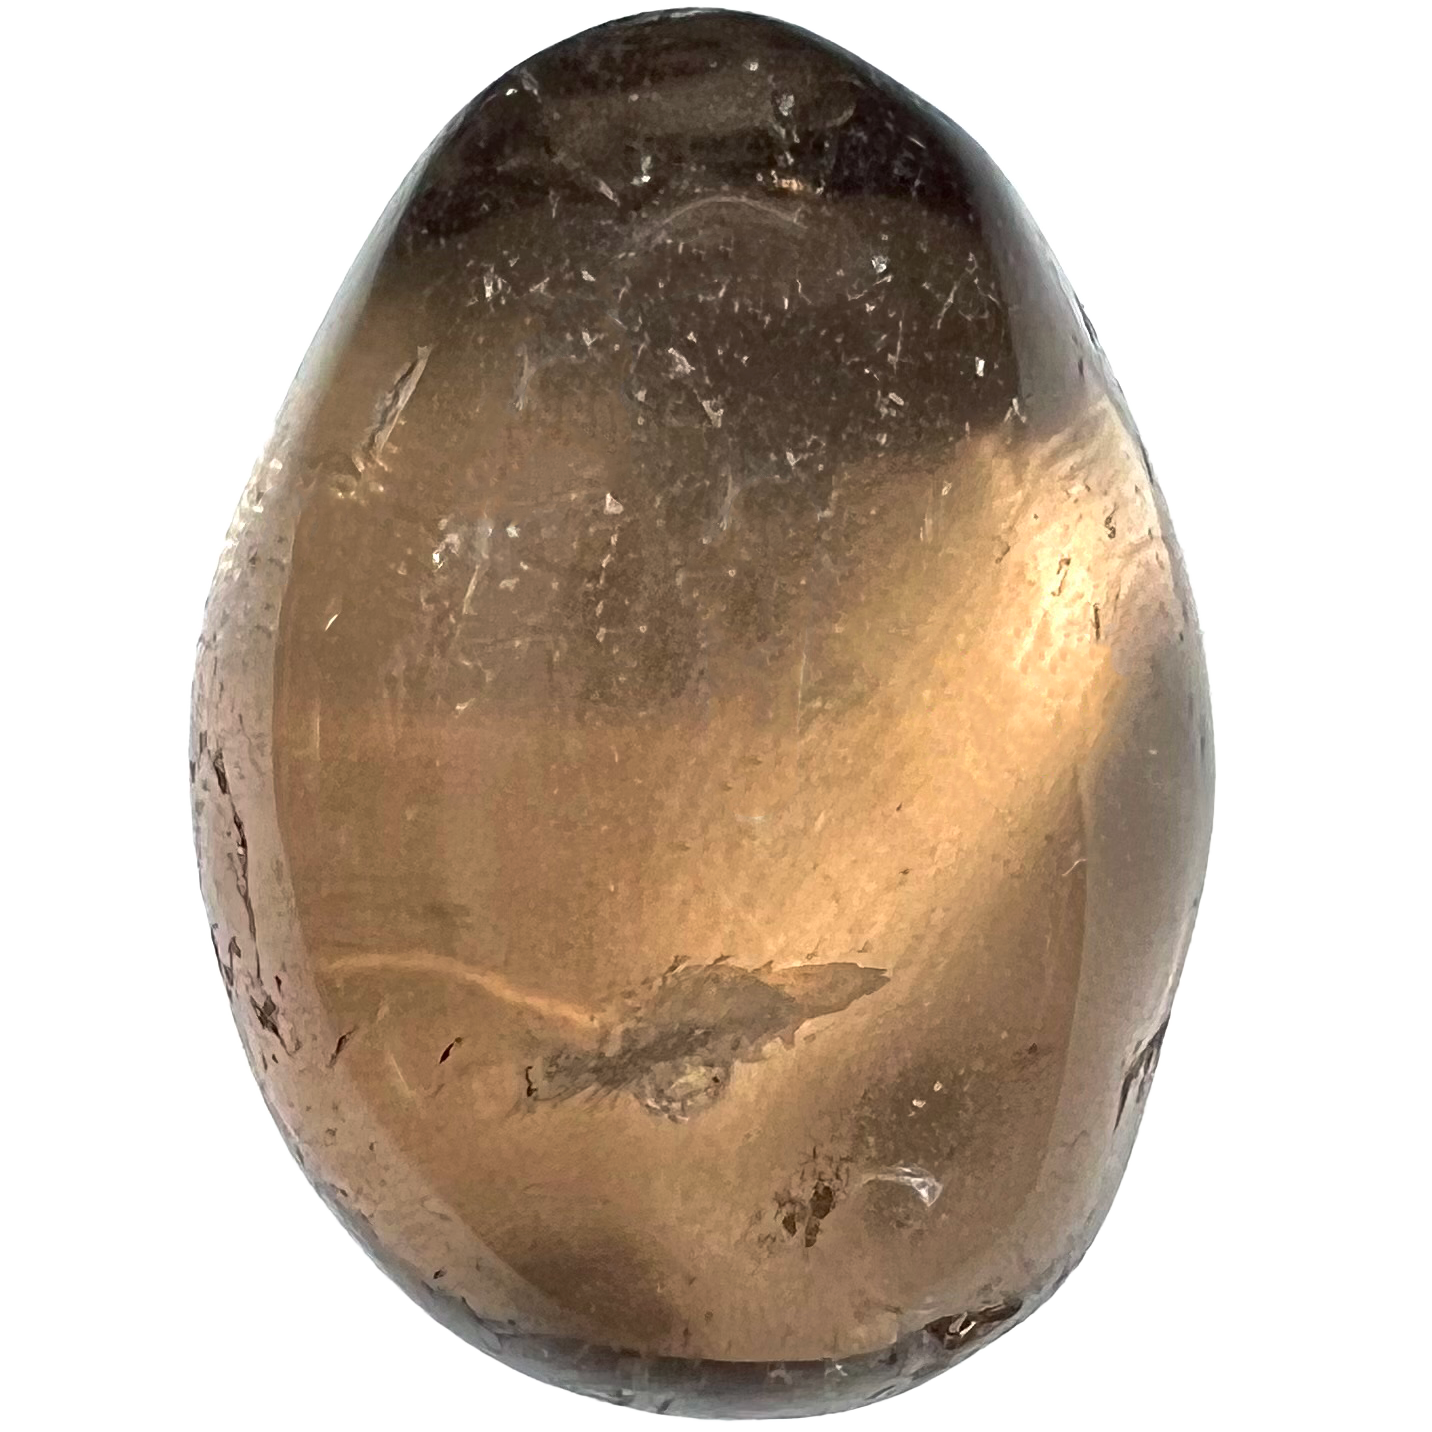 A transparent brown, tumbled smoky quartz stone.